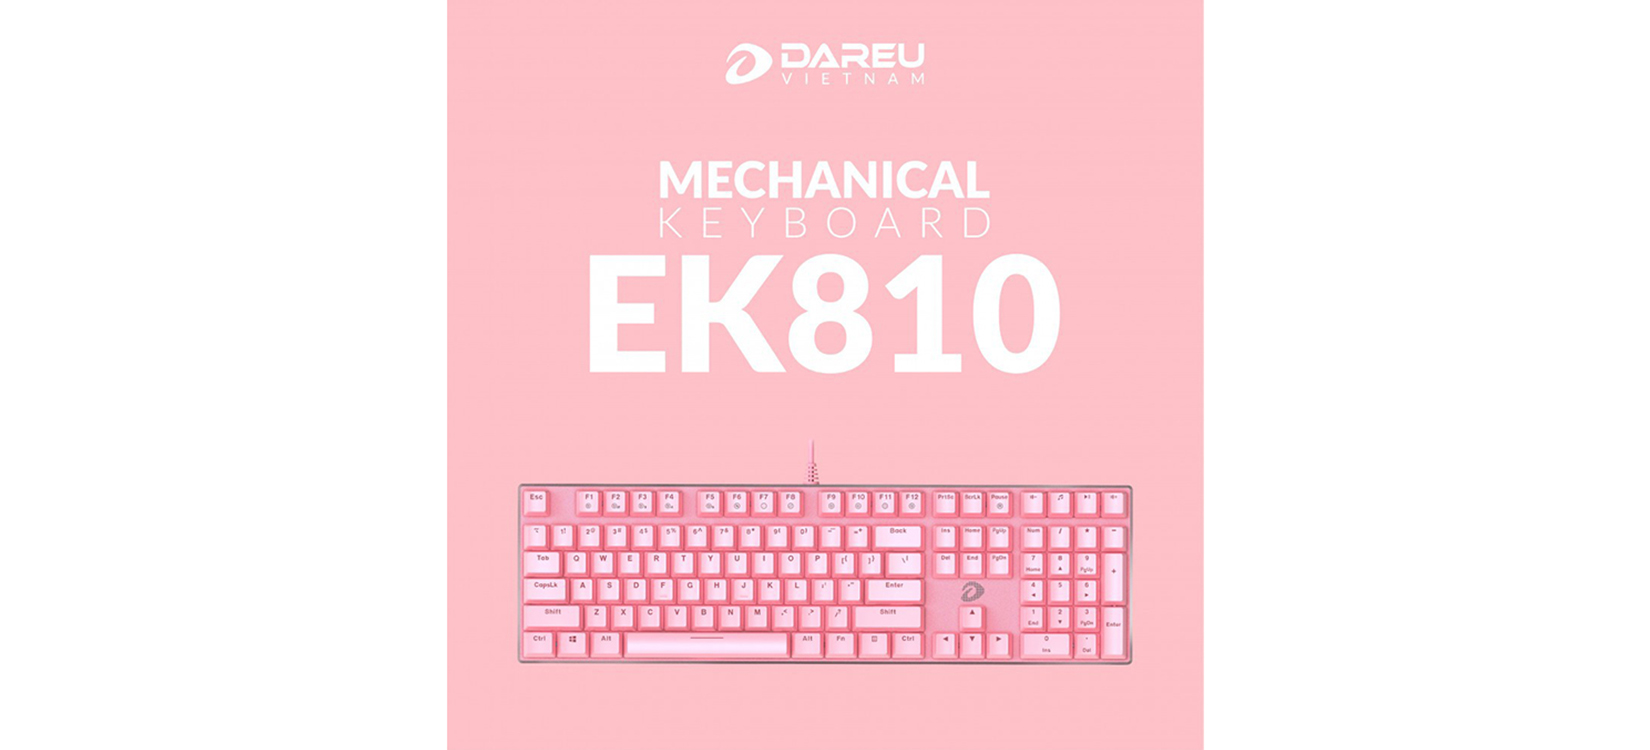 Bàn Phím cơ Dareu EK810 Pink